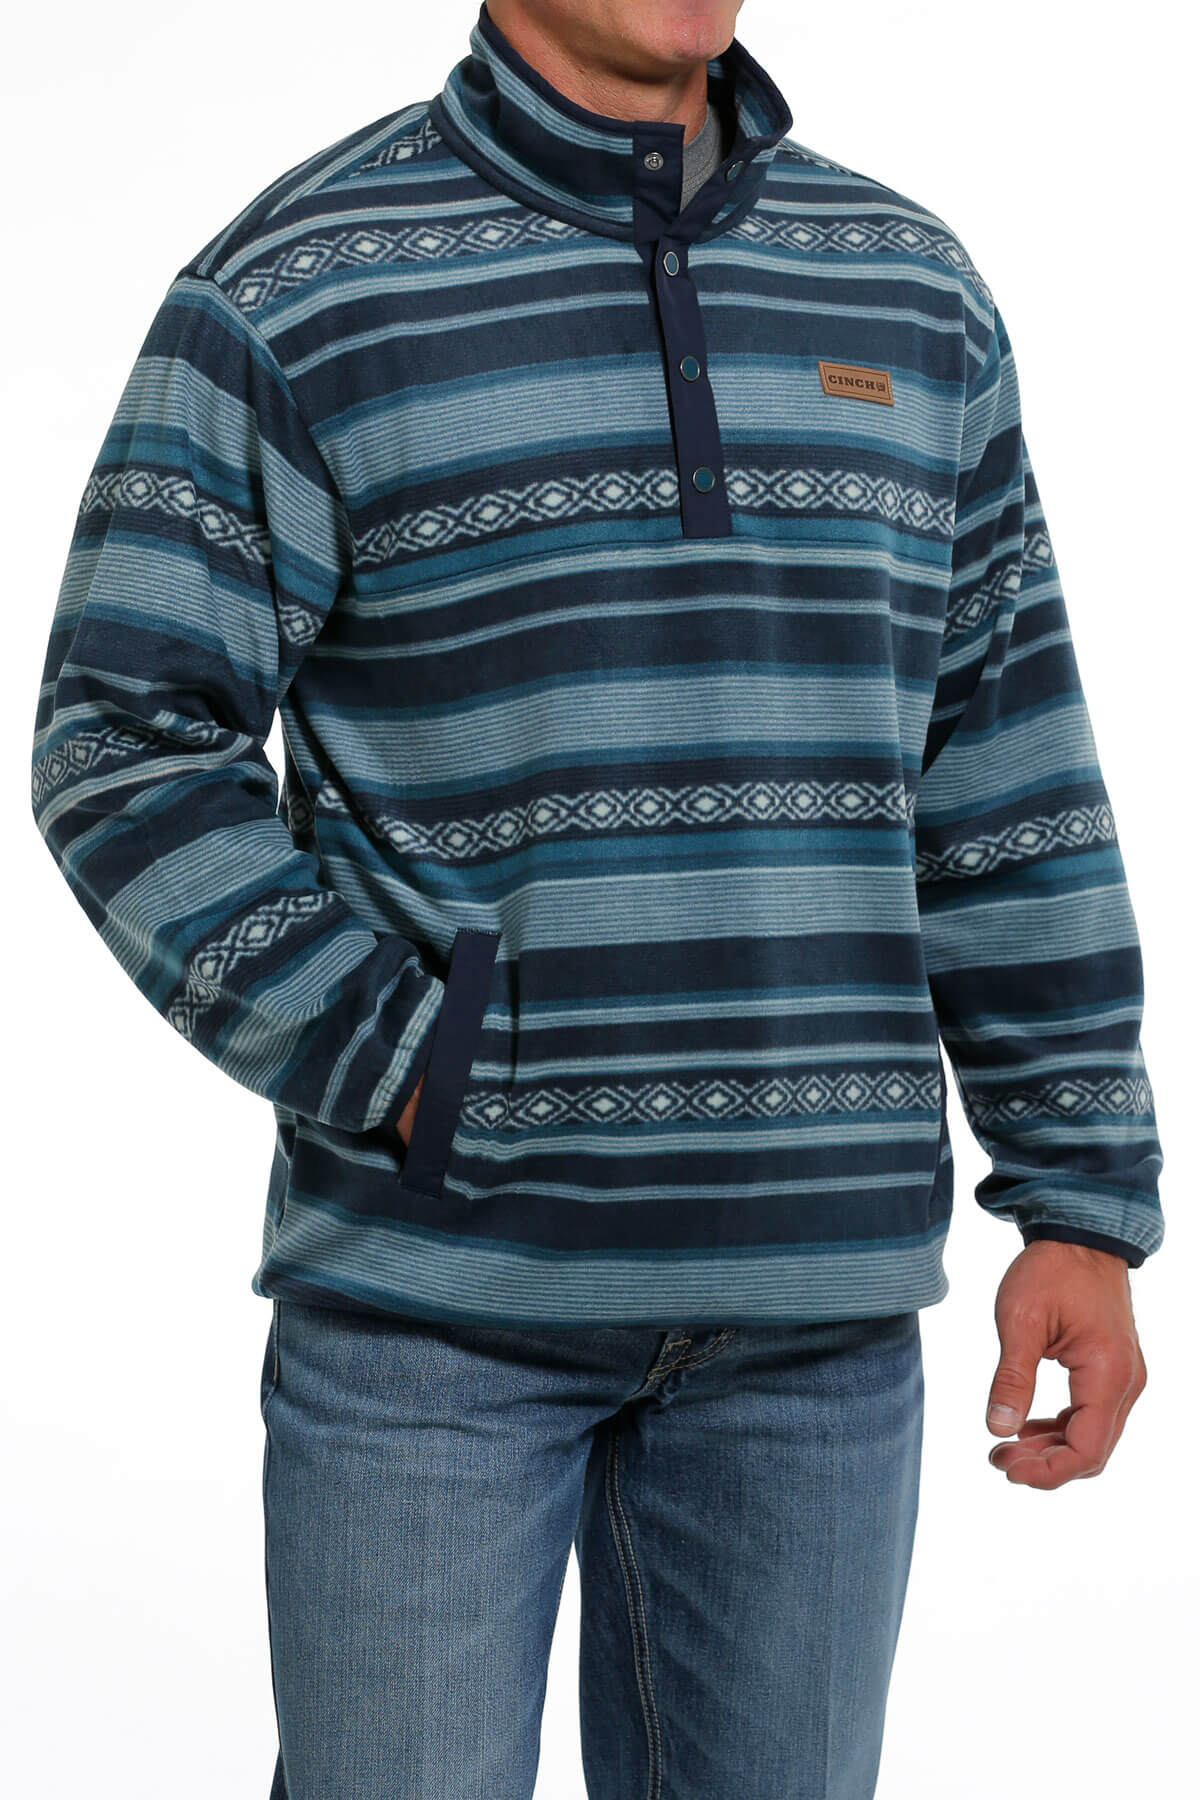 Cinch Fleece Pullover Blue Stripe Front View